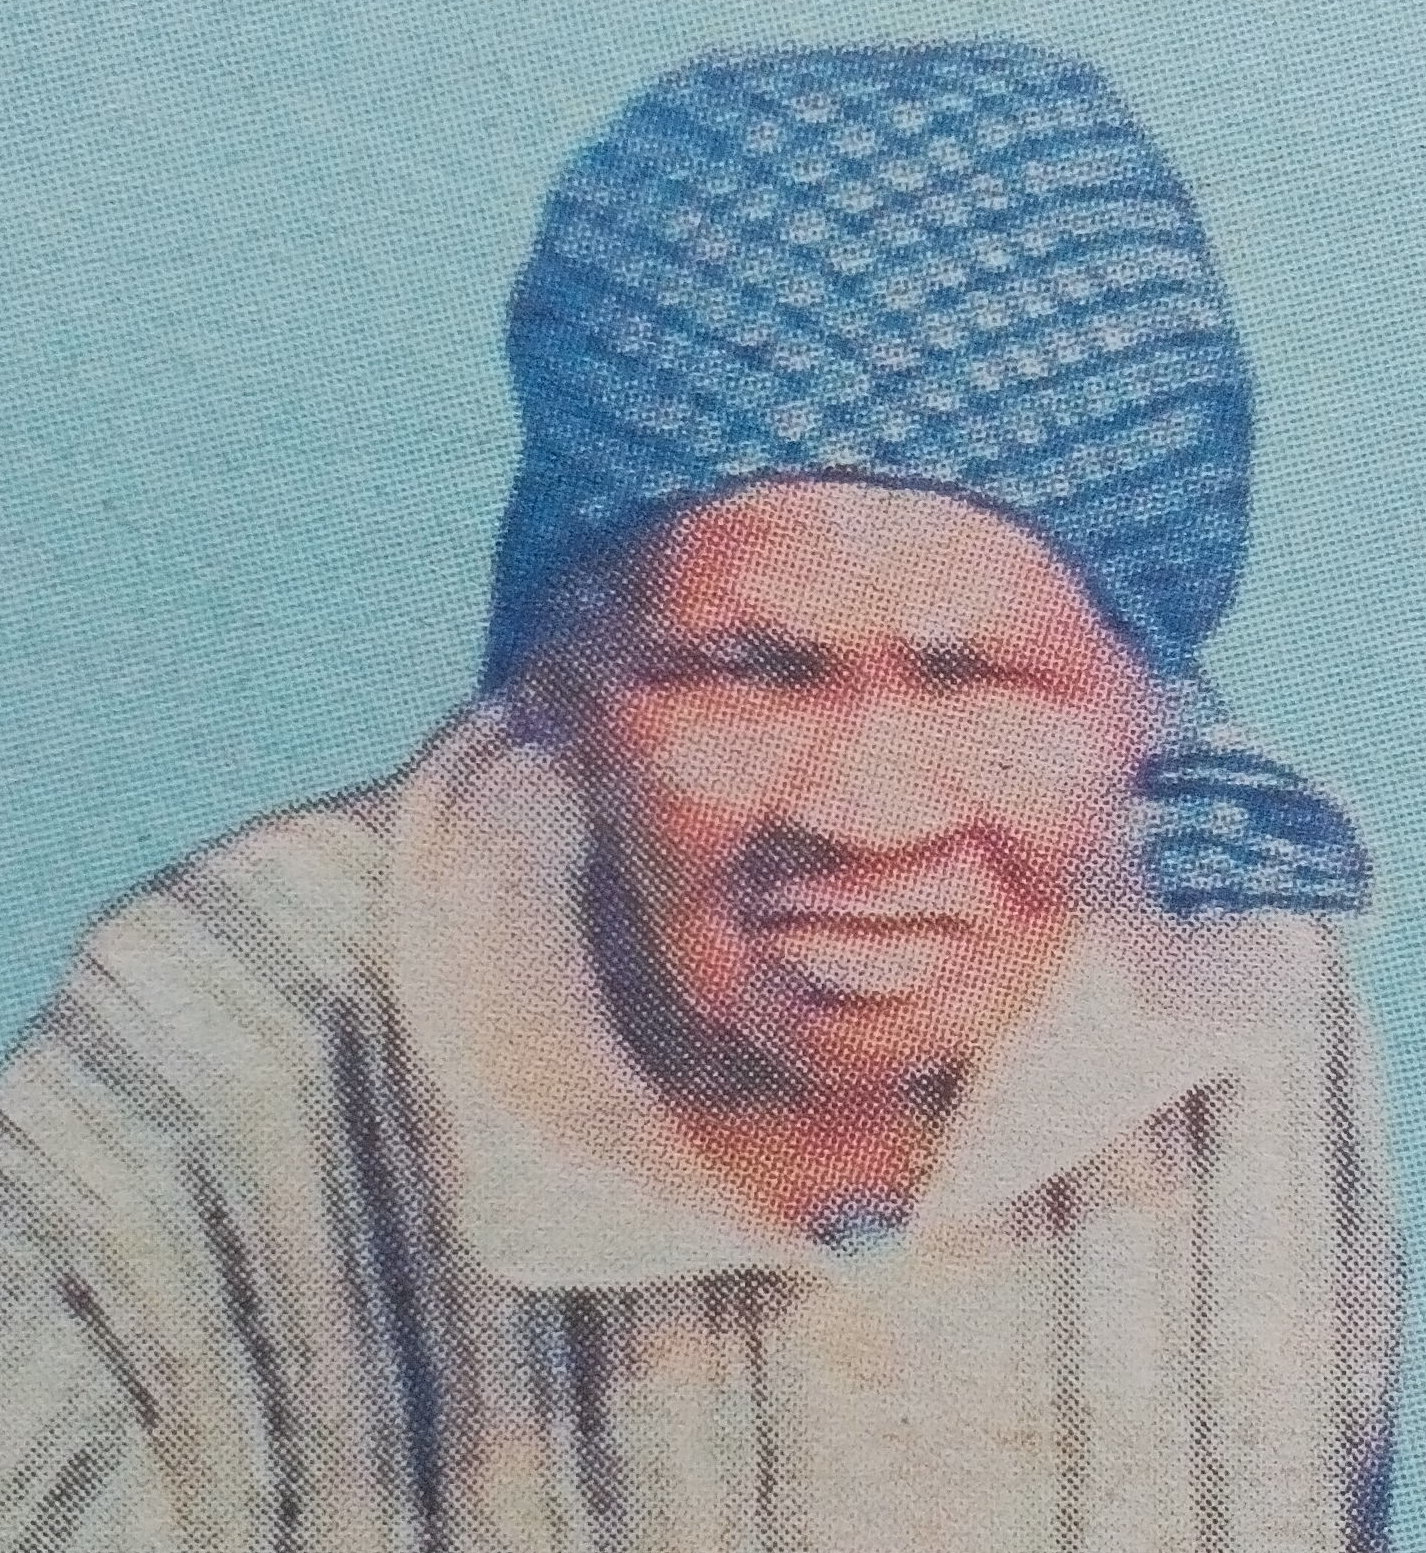 Obituary Image of Esther Wangui Muraya